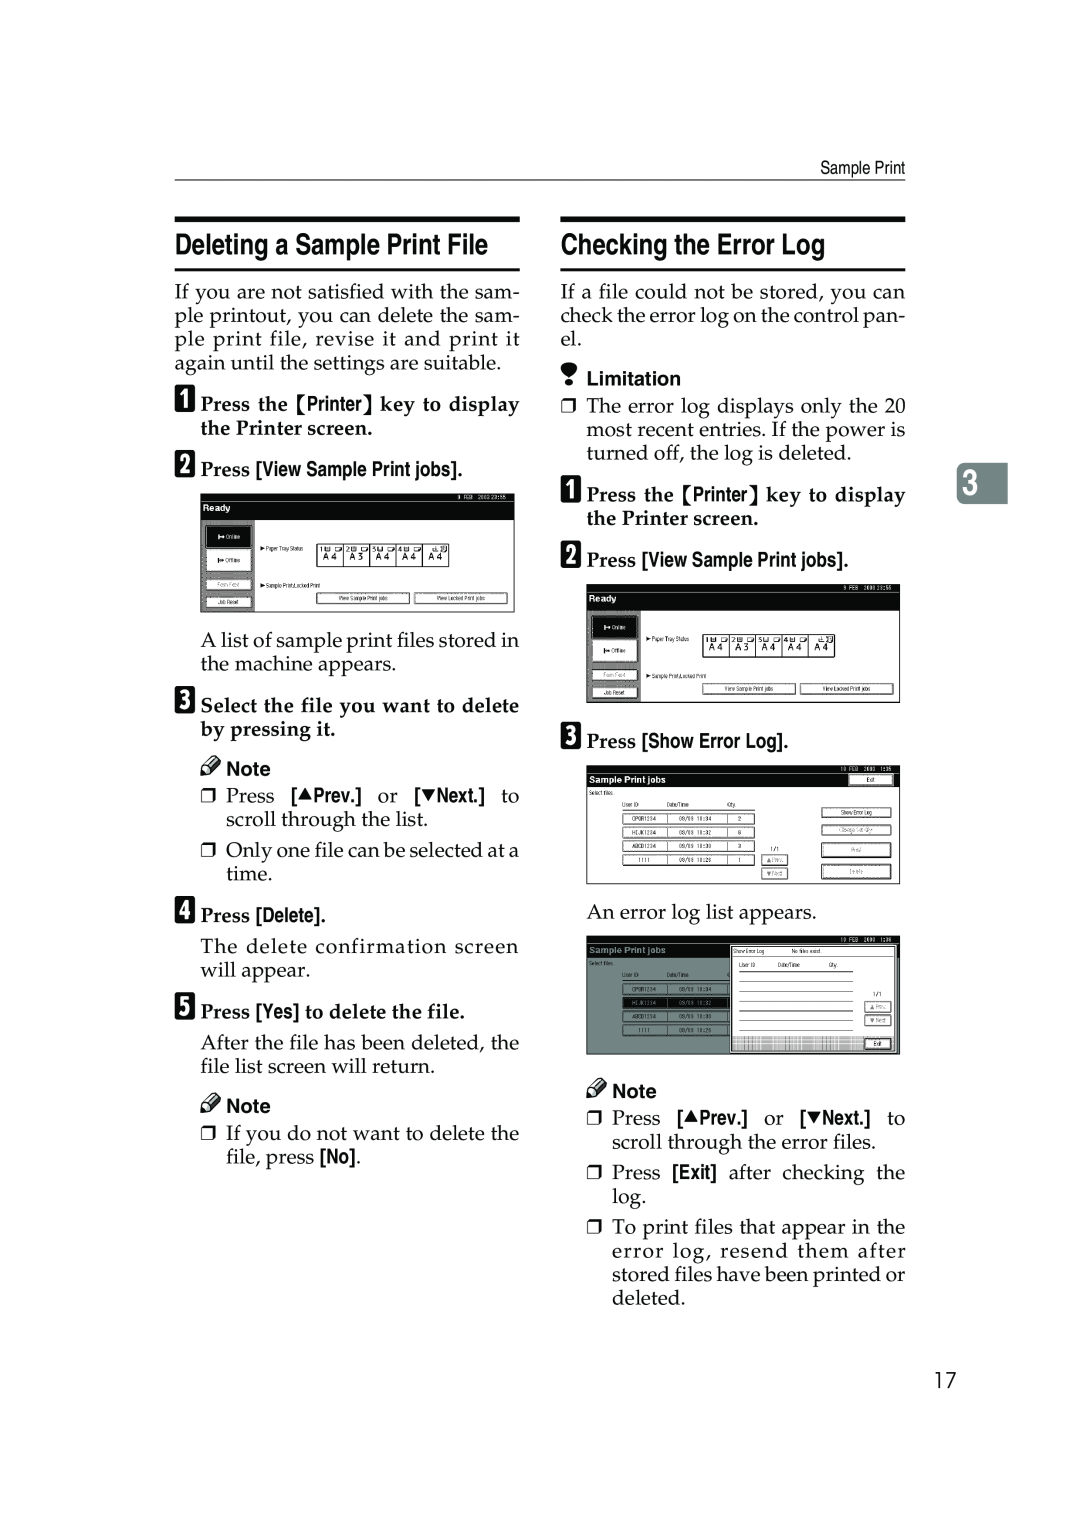 Xerox 2045e Deleting a Sample Print File, Checking the Error Log, A Press the Printer key to display the Printer screen 